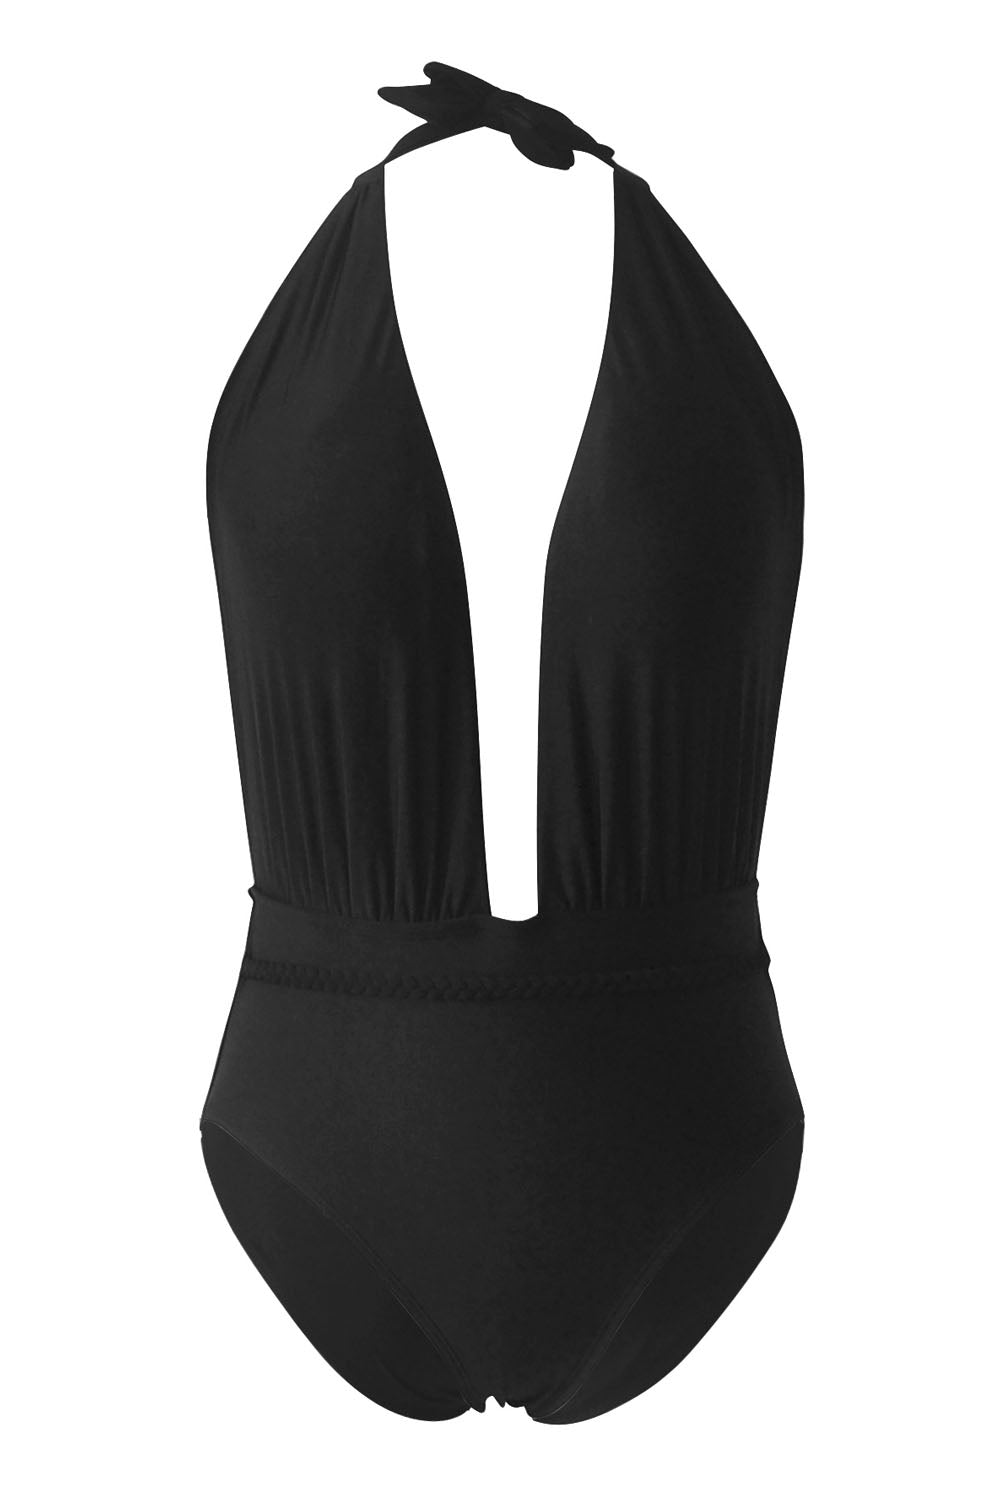 Iyasson Women's Sexy Deep V-Neck Halter Waist One-piece Swimsuit